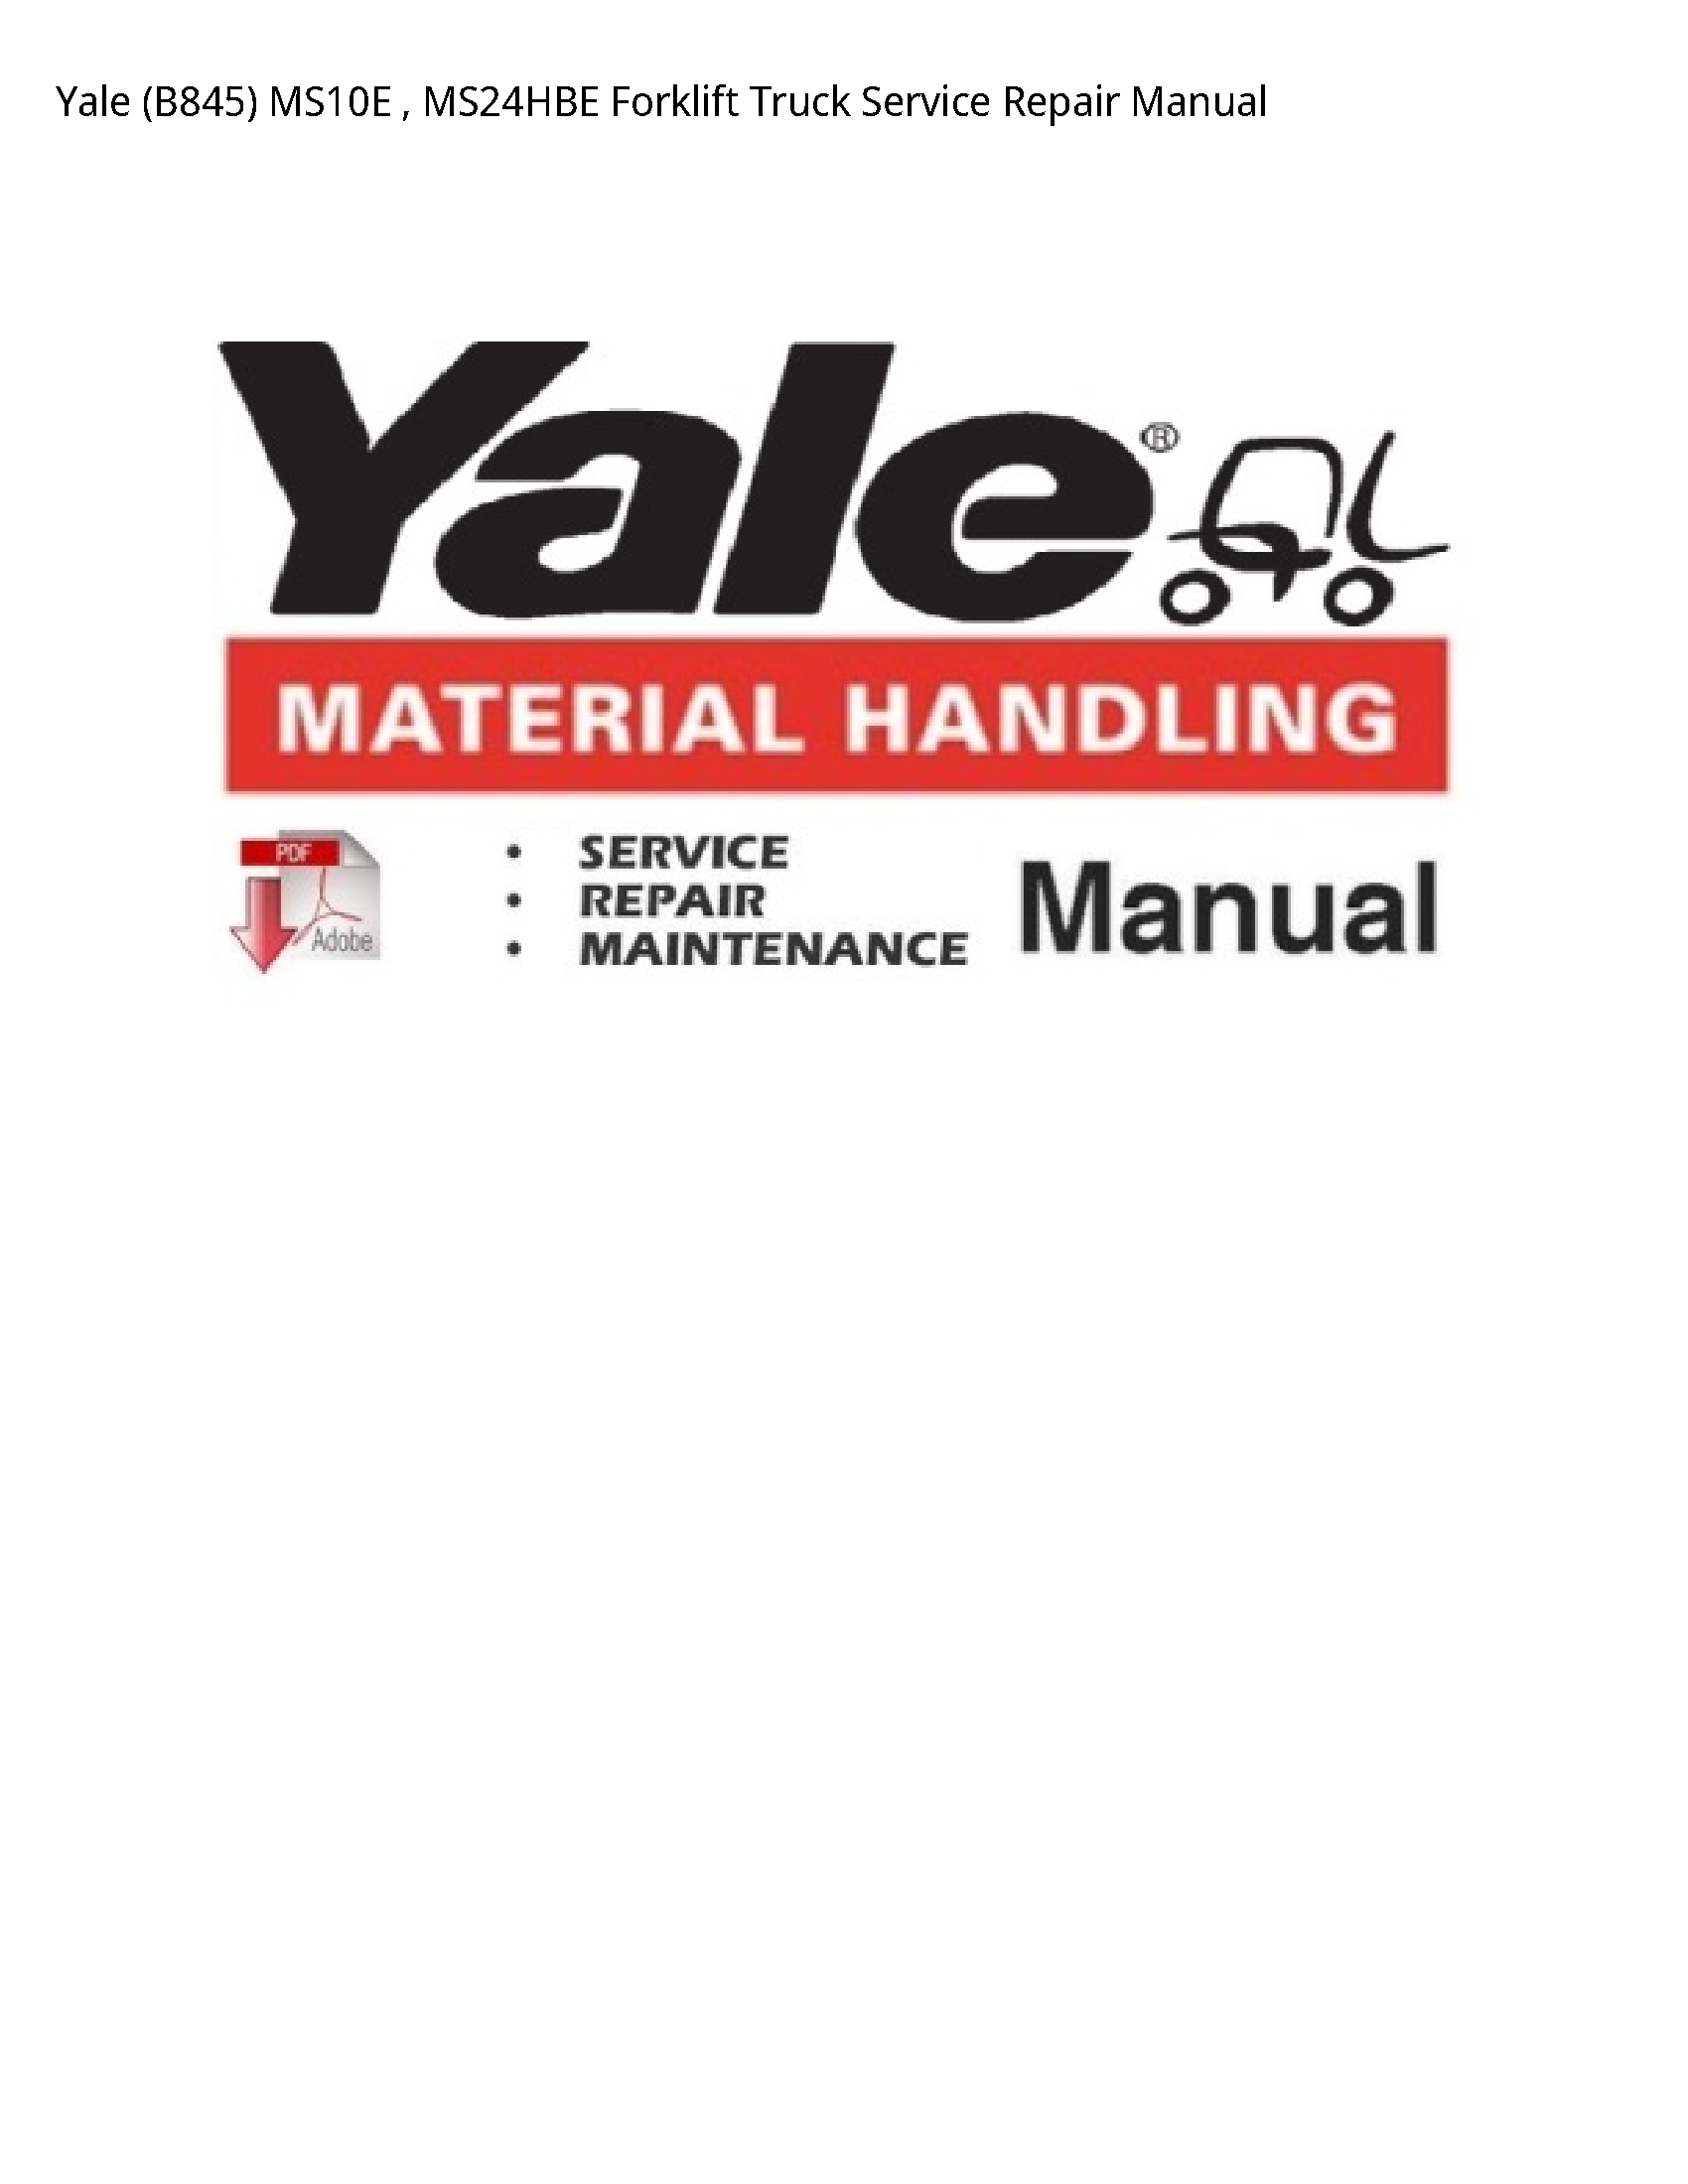 Yale (B845) Forklift Truck manual